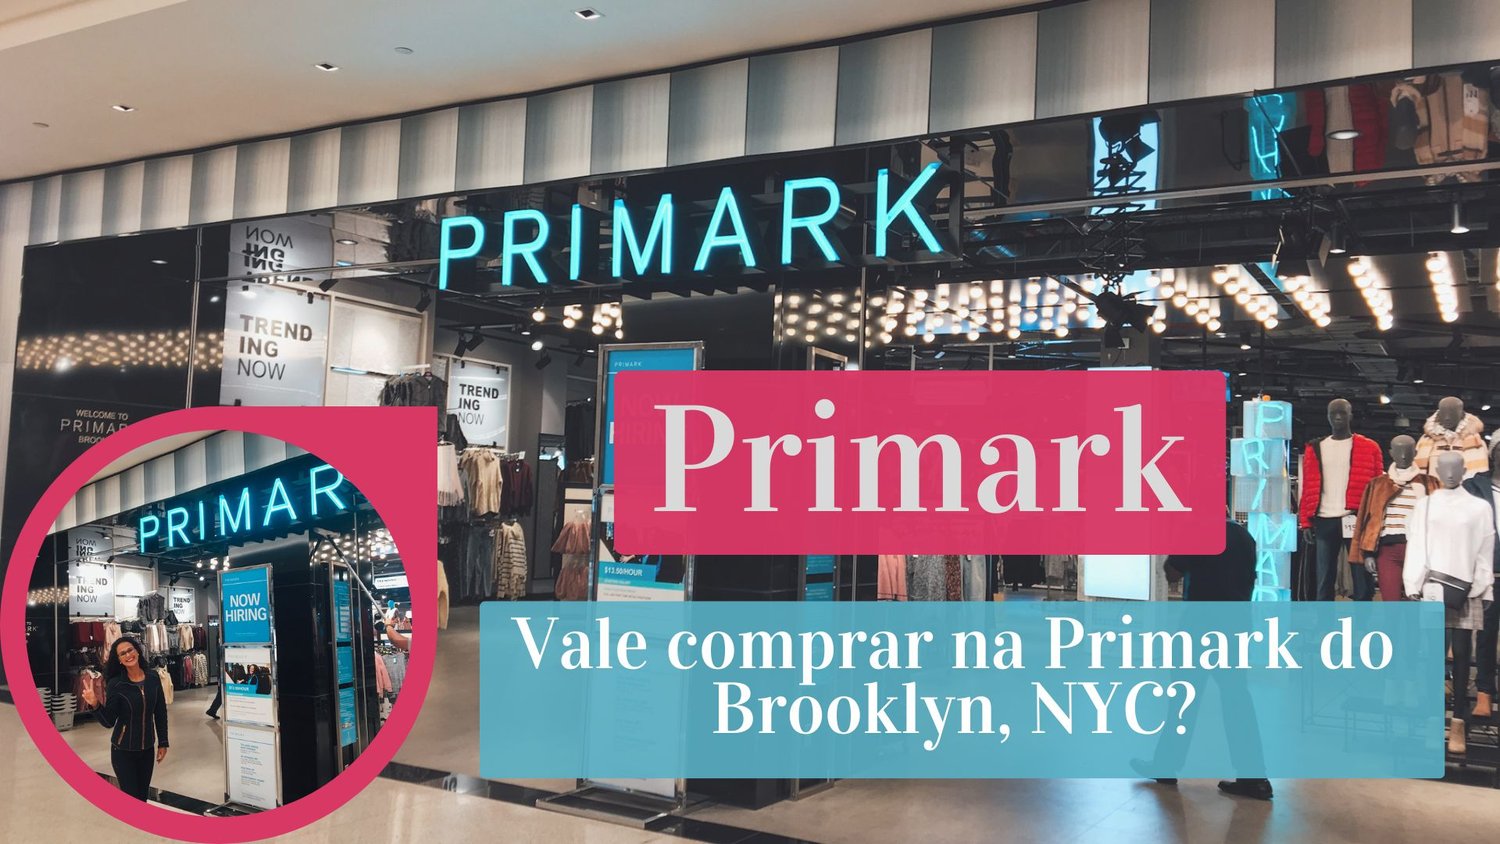 Comprar na Primark do Brooklyn, NYC - Vale a pena?